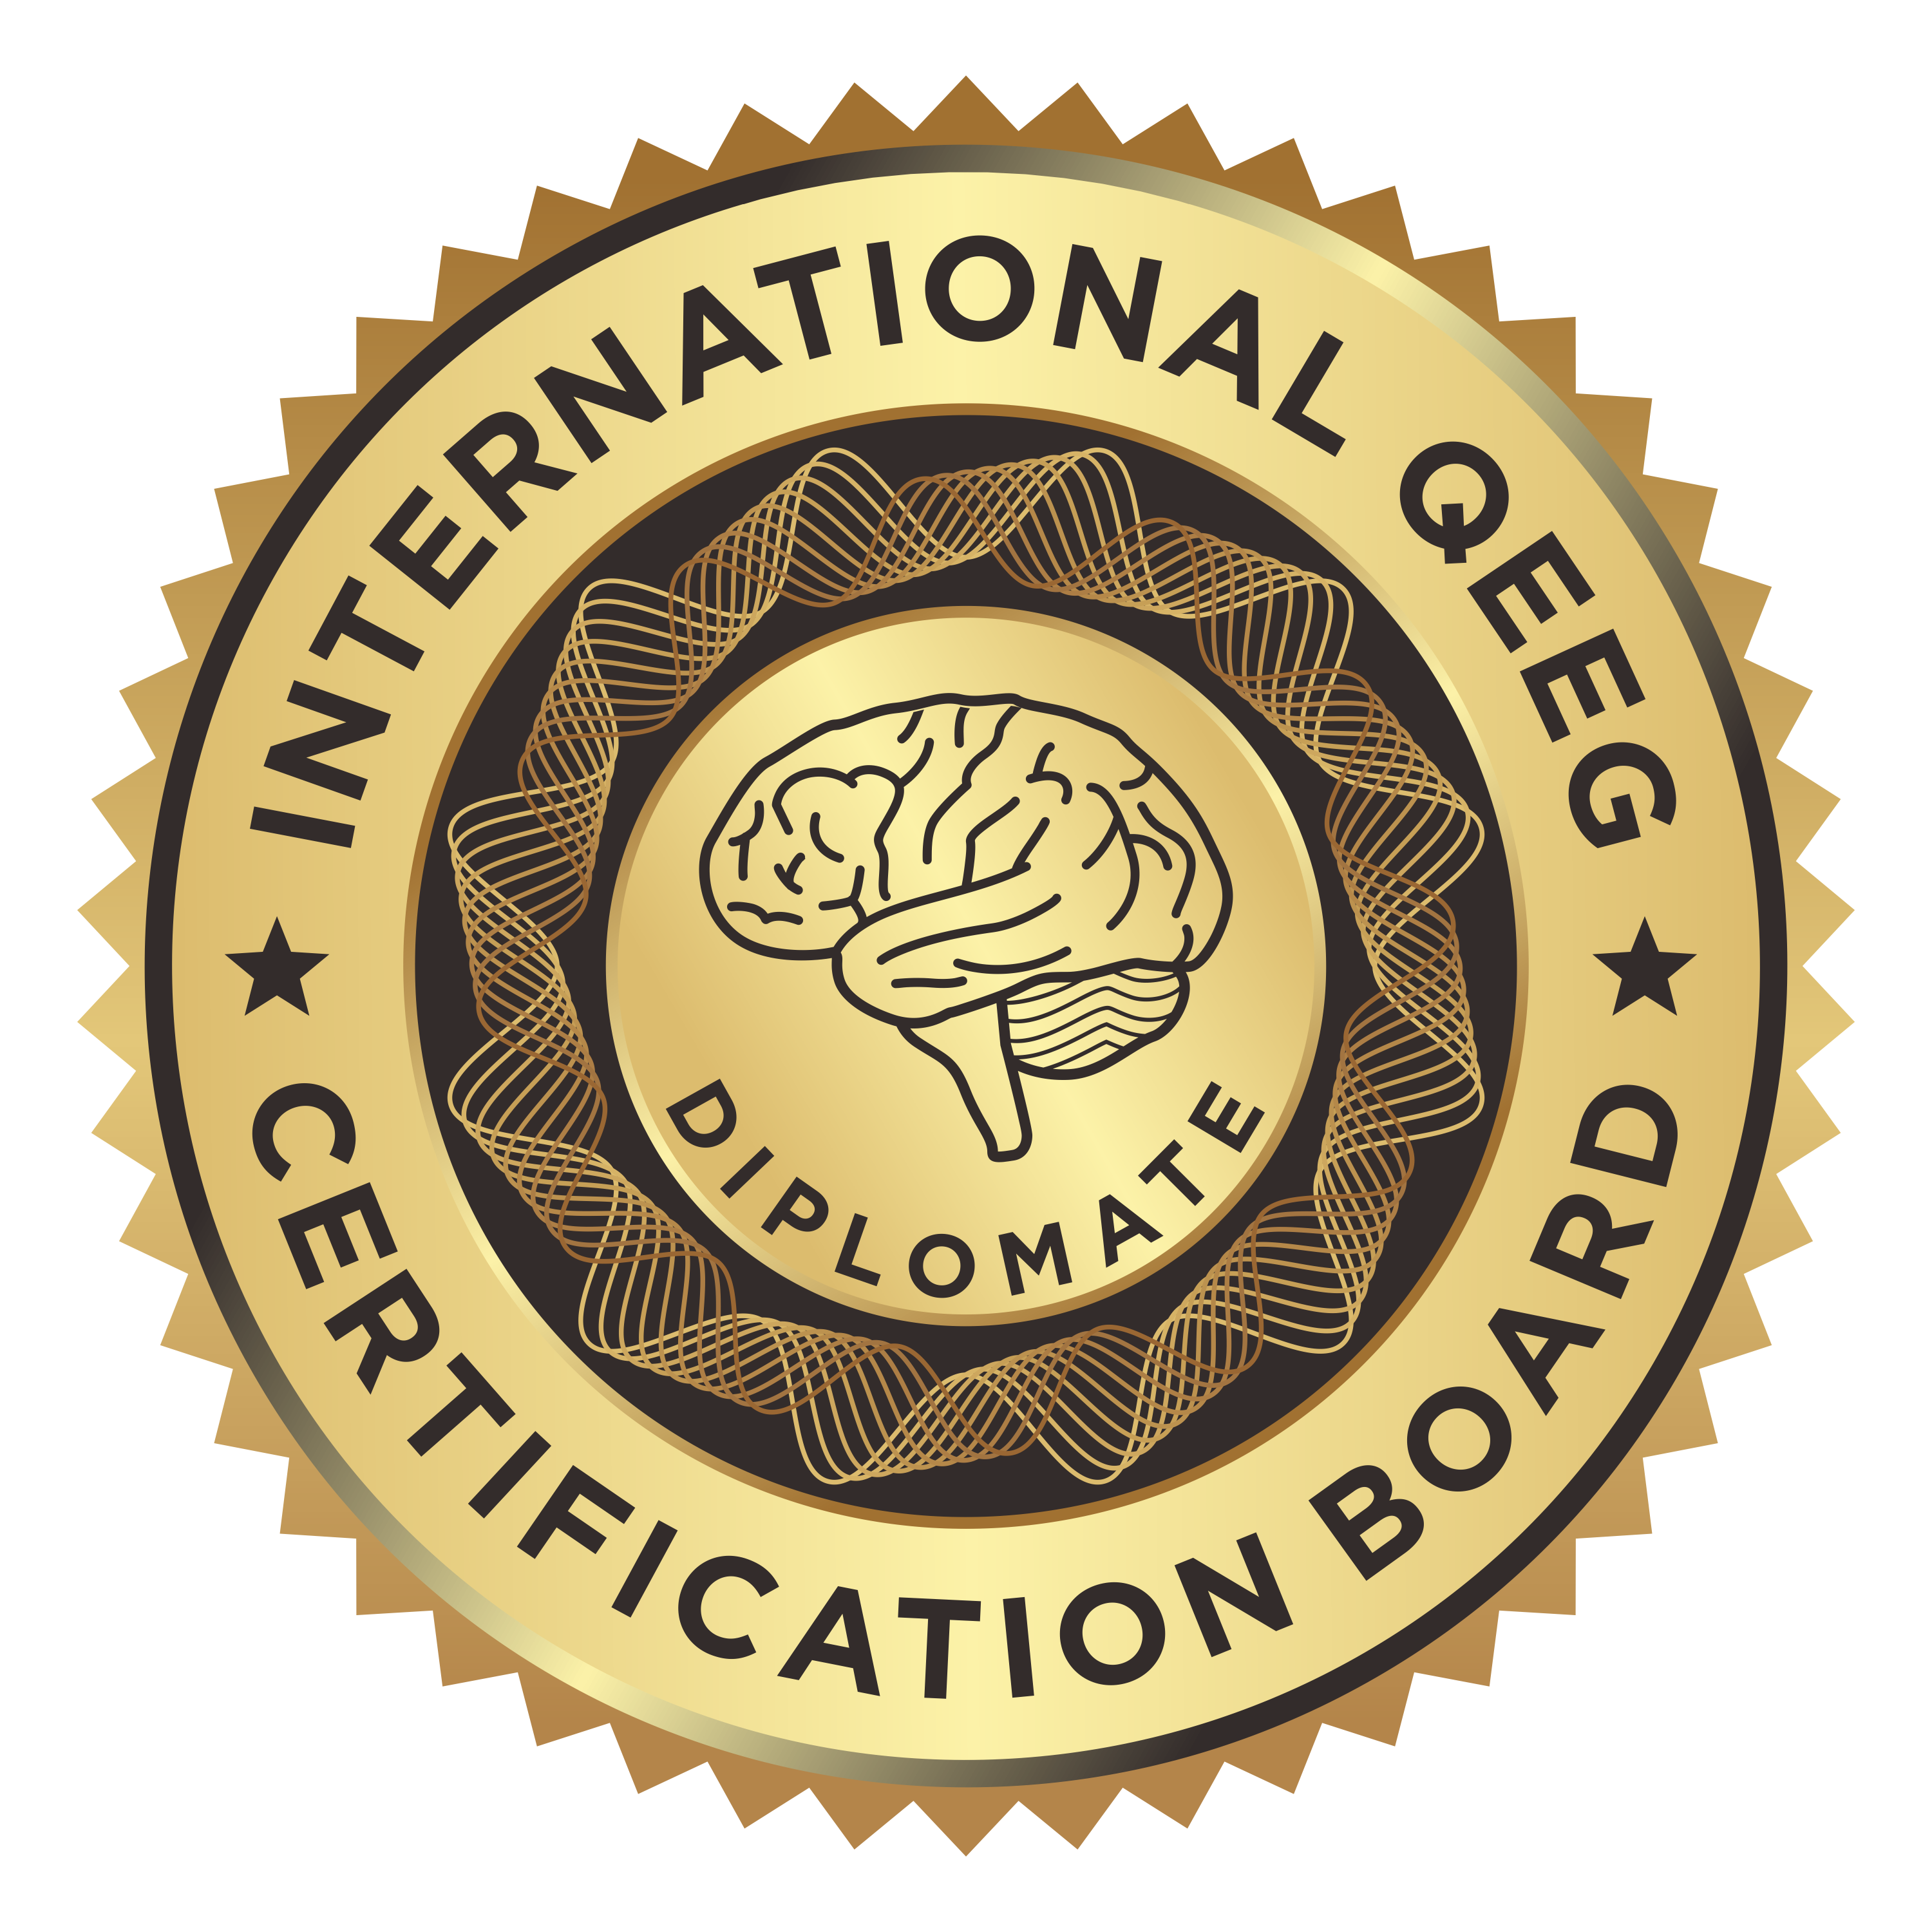 International QEEG Certification Board logo